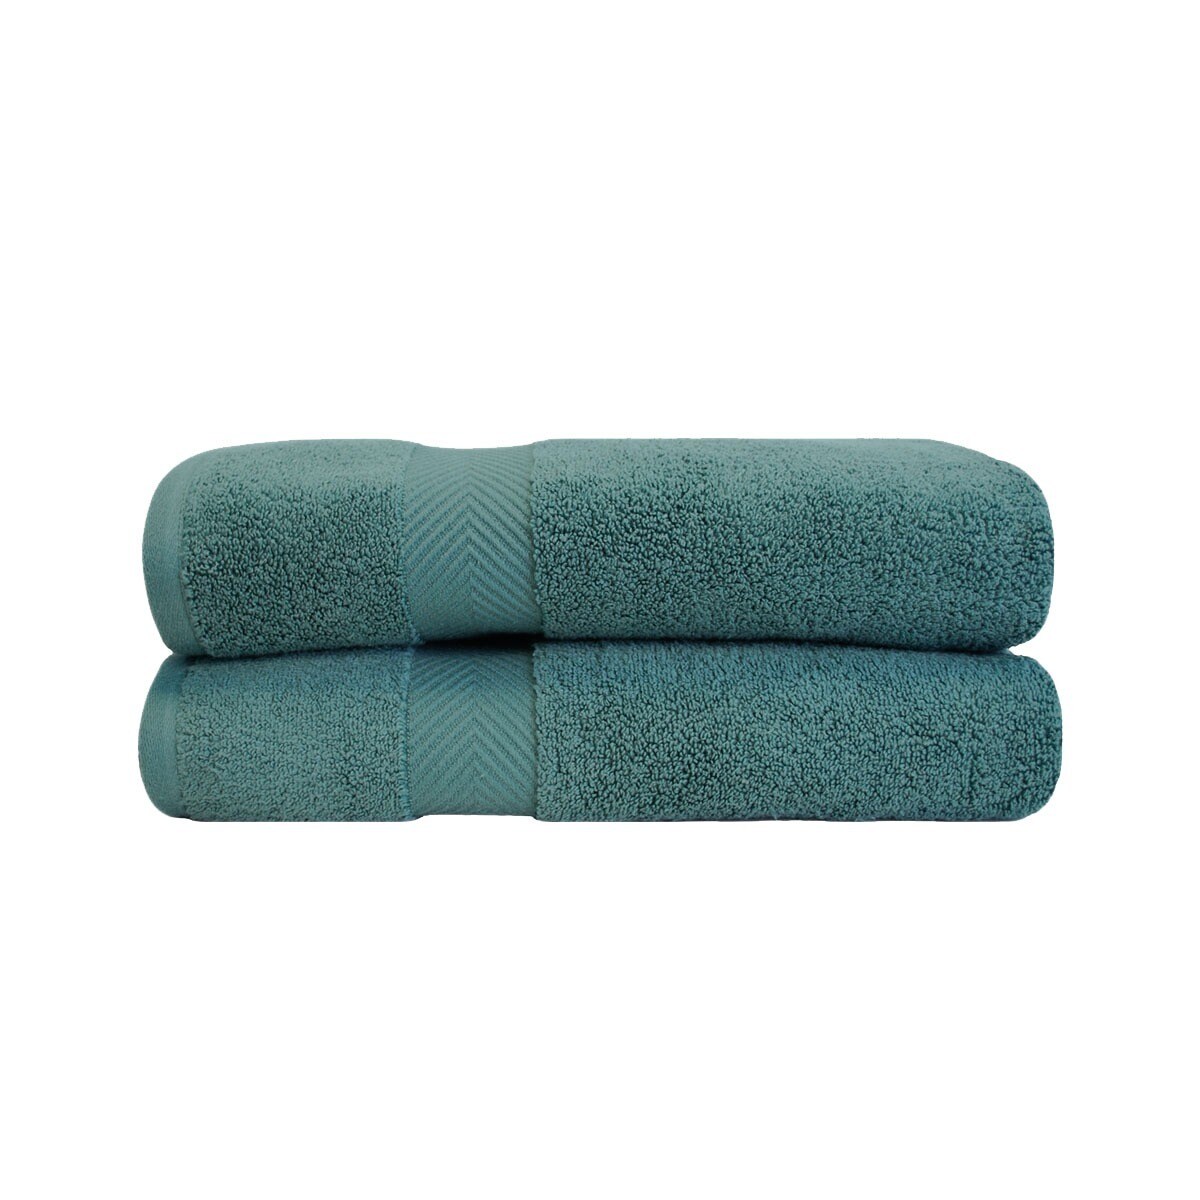 https://ak1.ostkcdn.com/images/products/9793448/Superior-Collection-Super-Soft-Absorbent-Zero-Twist-2-piece-Cotton-Bath-Towels-ba29a452-0704-48b3-8023-463b6556d739.jpg